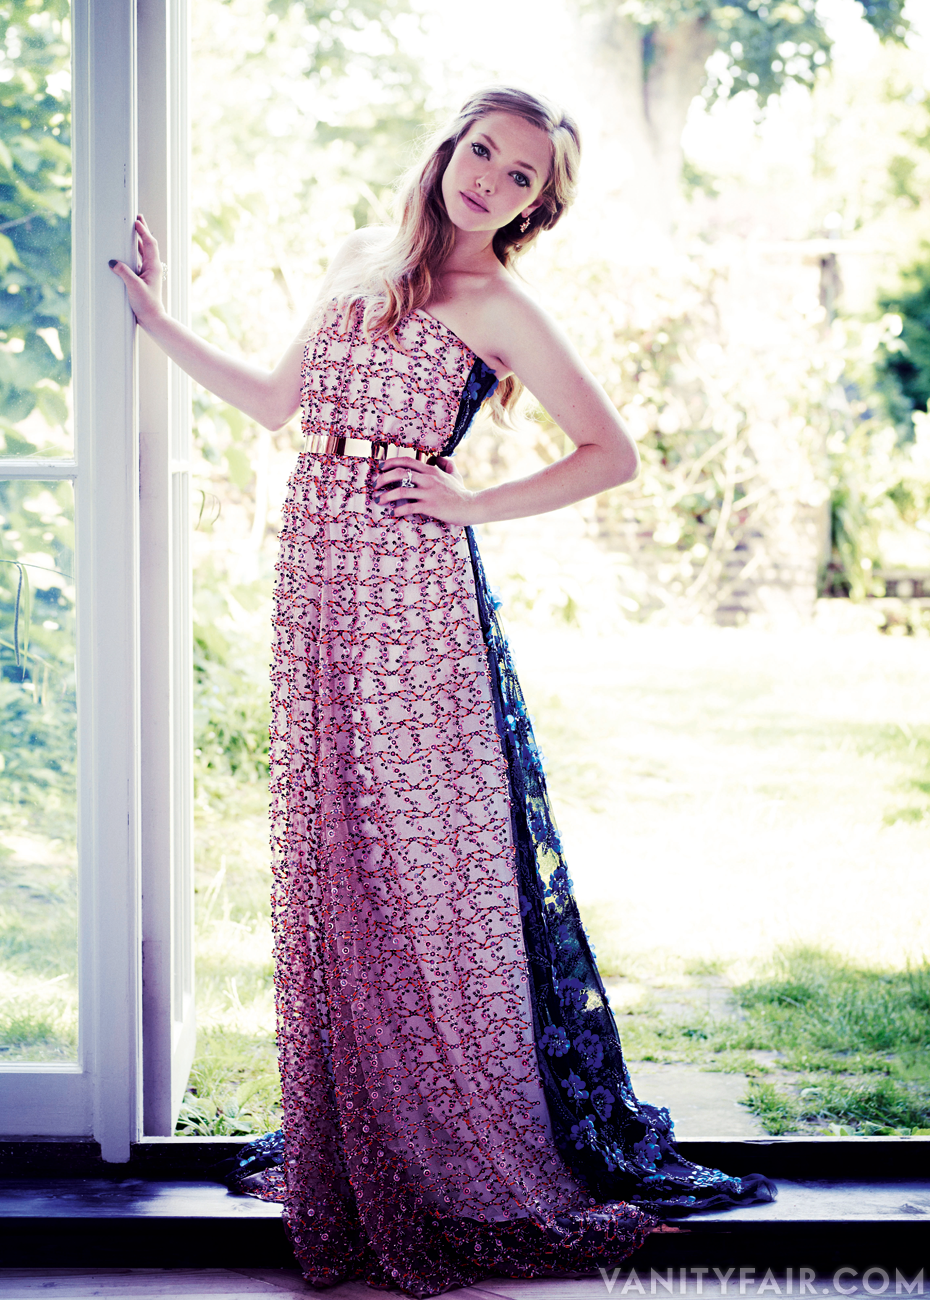 Amanda Seyfried Pink Dress Wallpapers